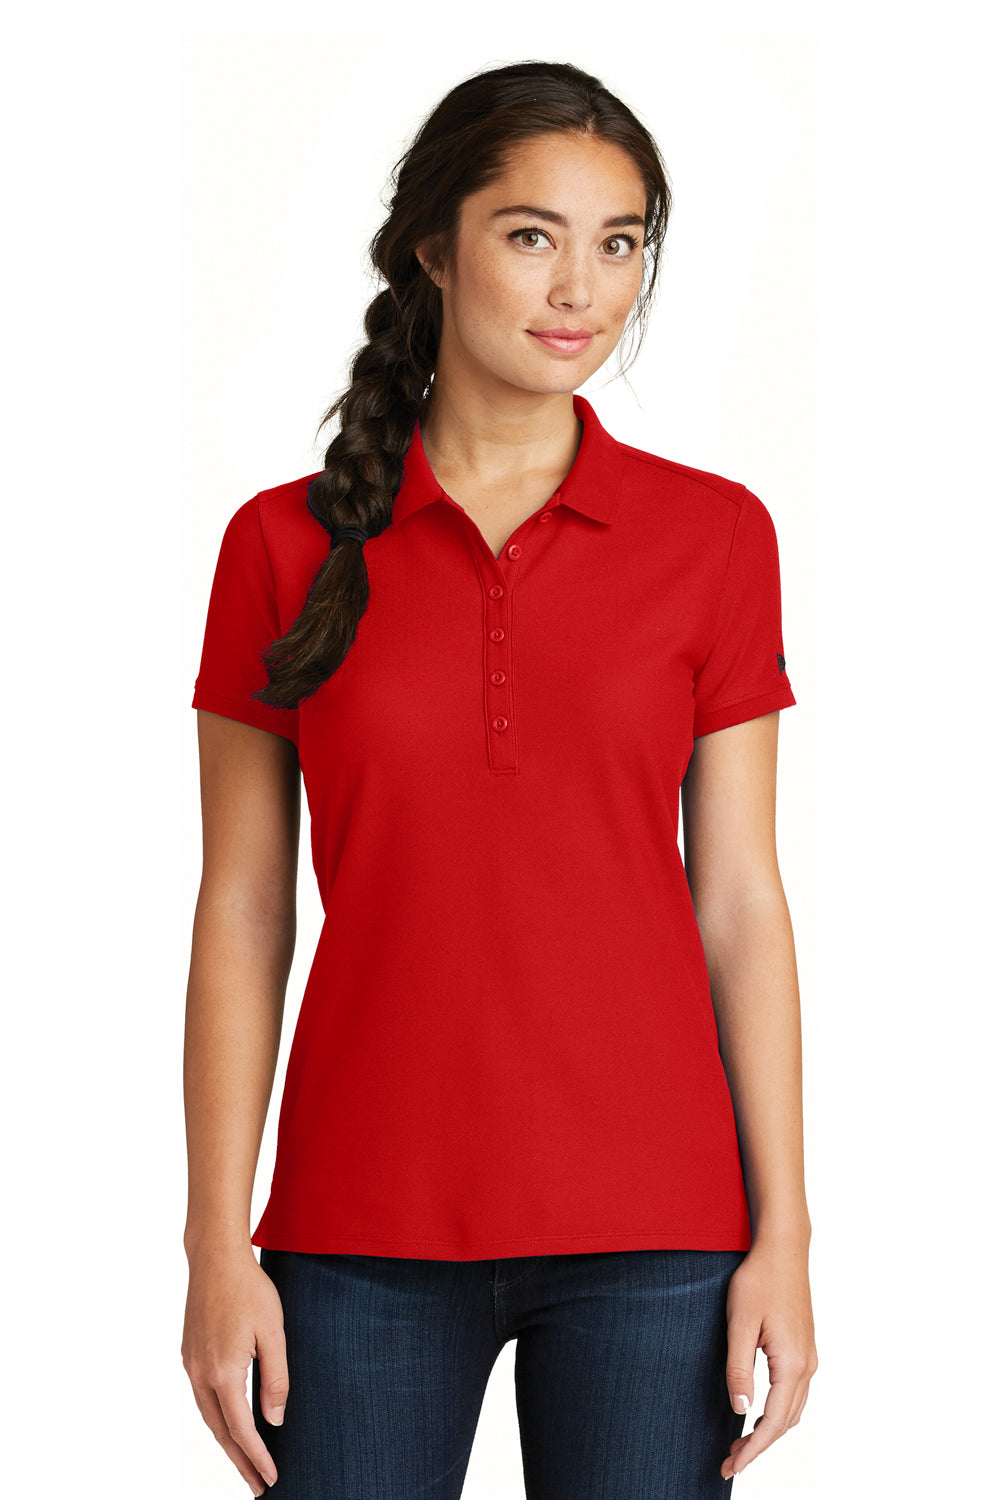 New Era LNEA300 Womens Venue Home Plate Moisture Wicking Short Sleeve Polo Shirt Red Front